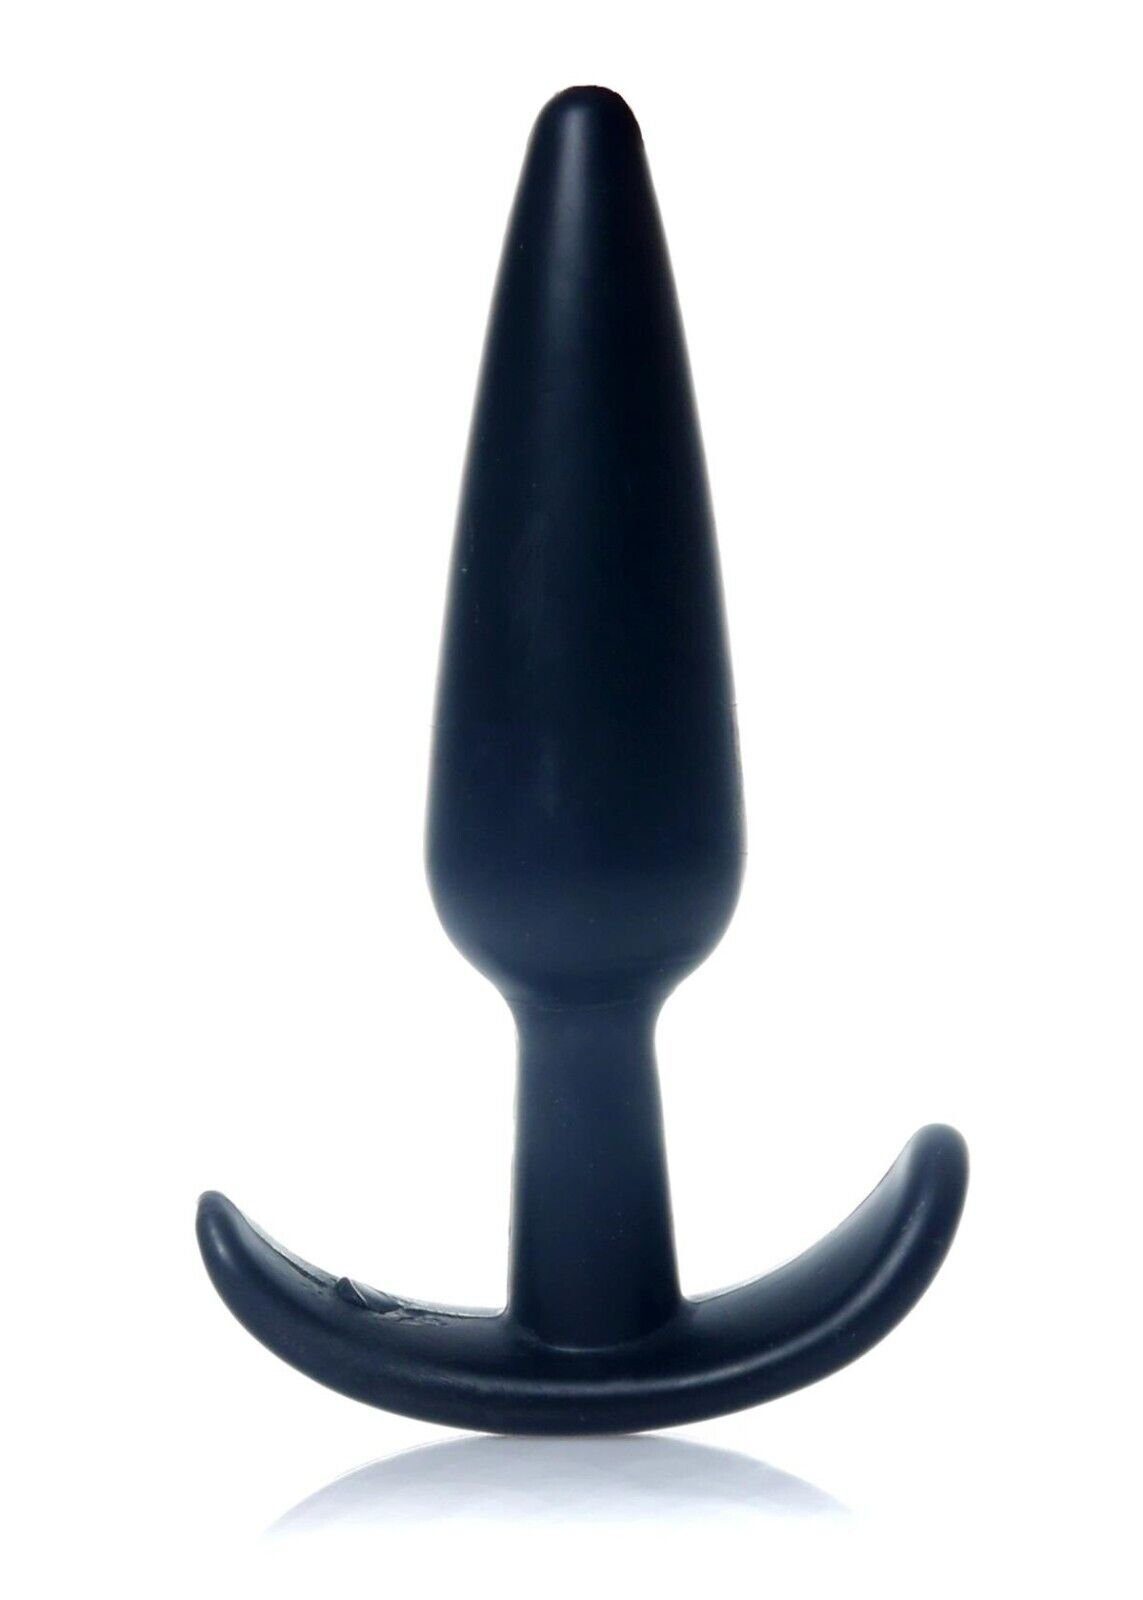 Plug 12cm Anal denu-shop Sexspielzeug Anal Analplug Stöpsel Weich T-Plug Lang